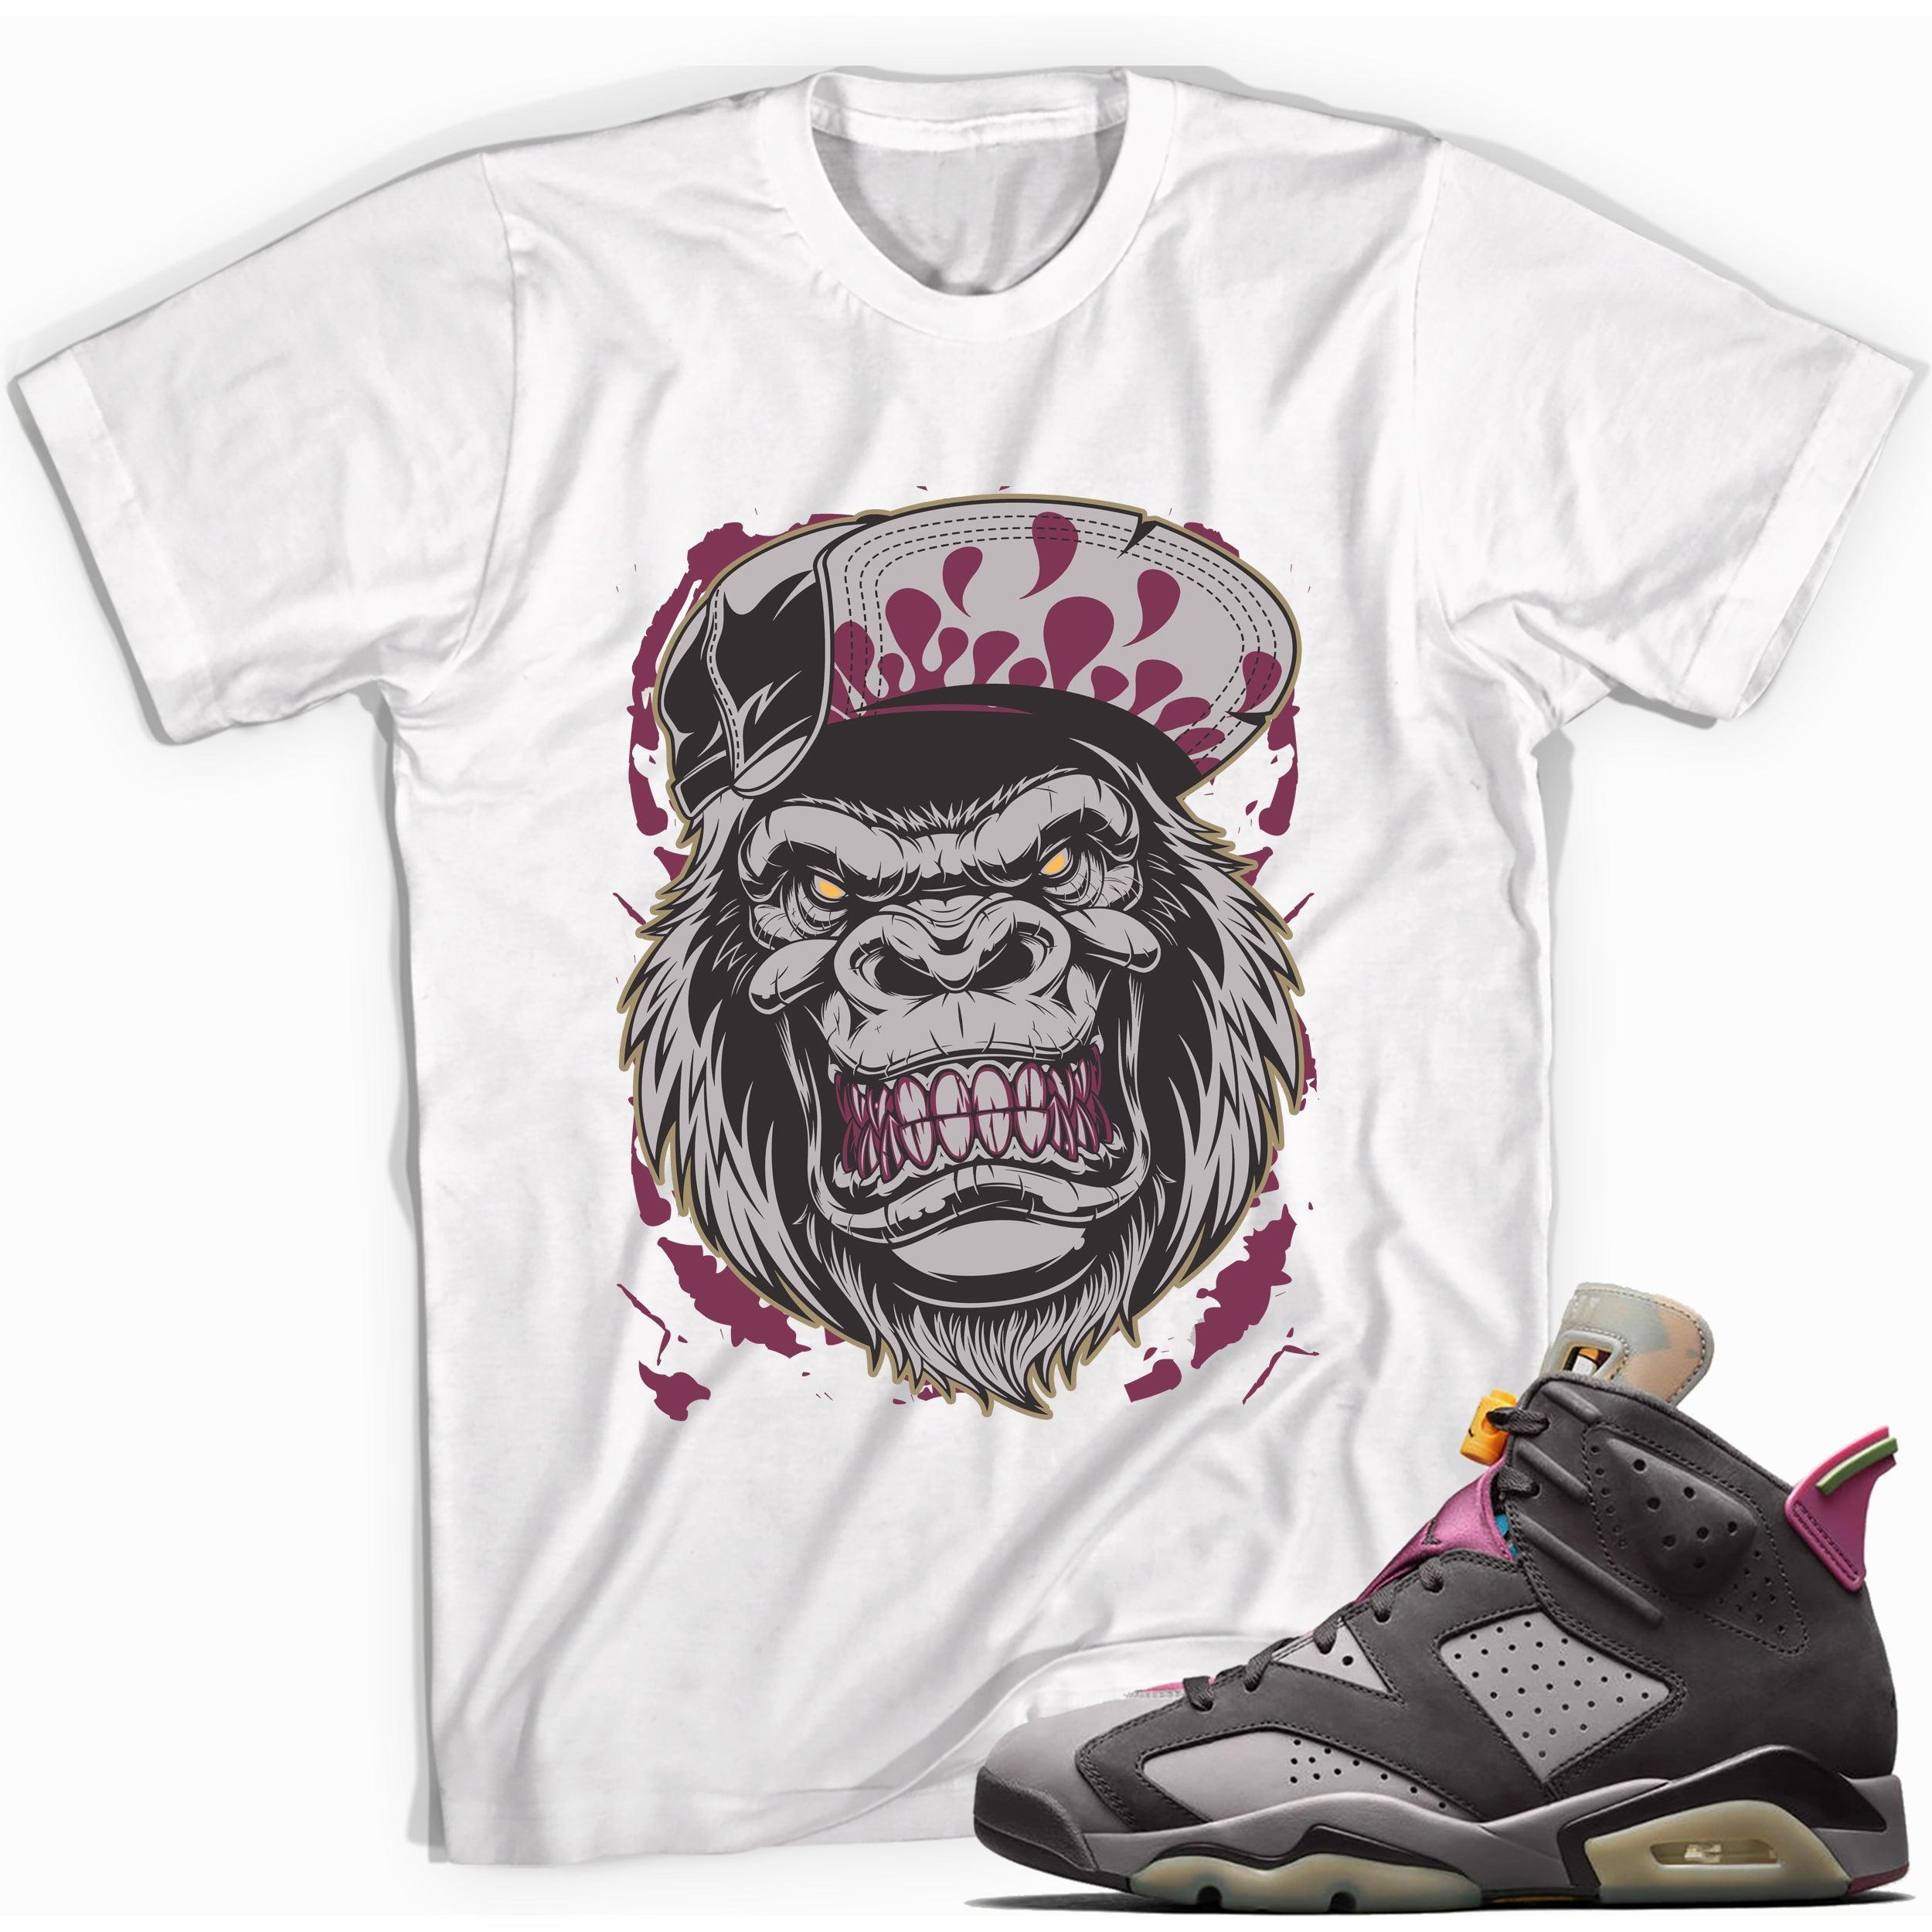 Gorilla Beast Shirt Jordan 6s Bordeaux photo